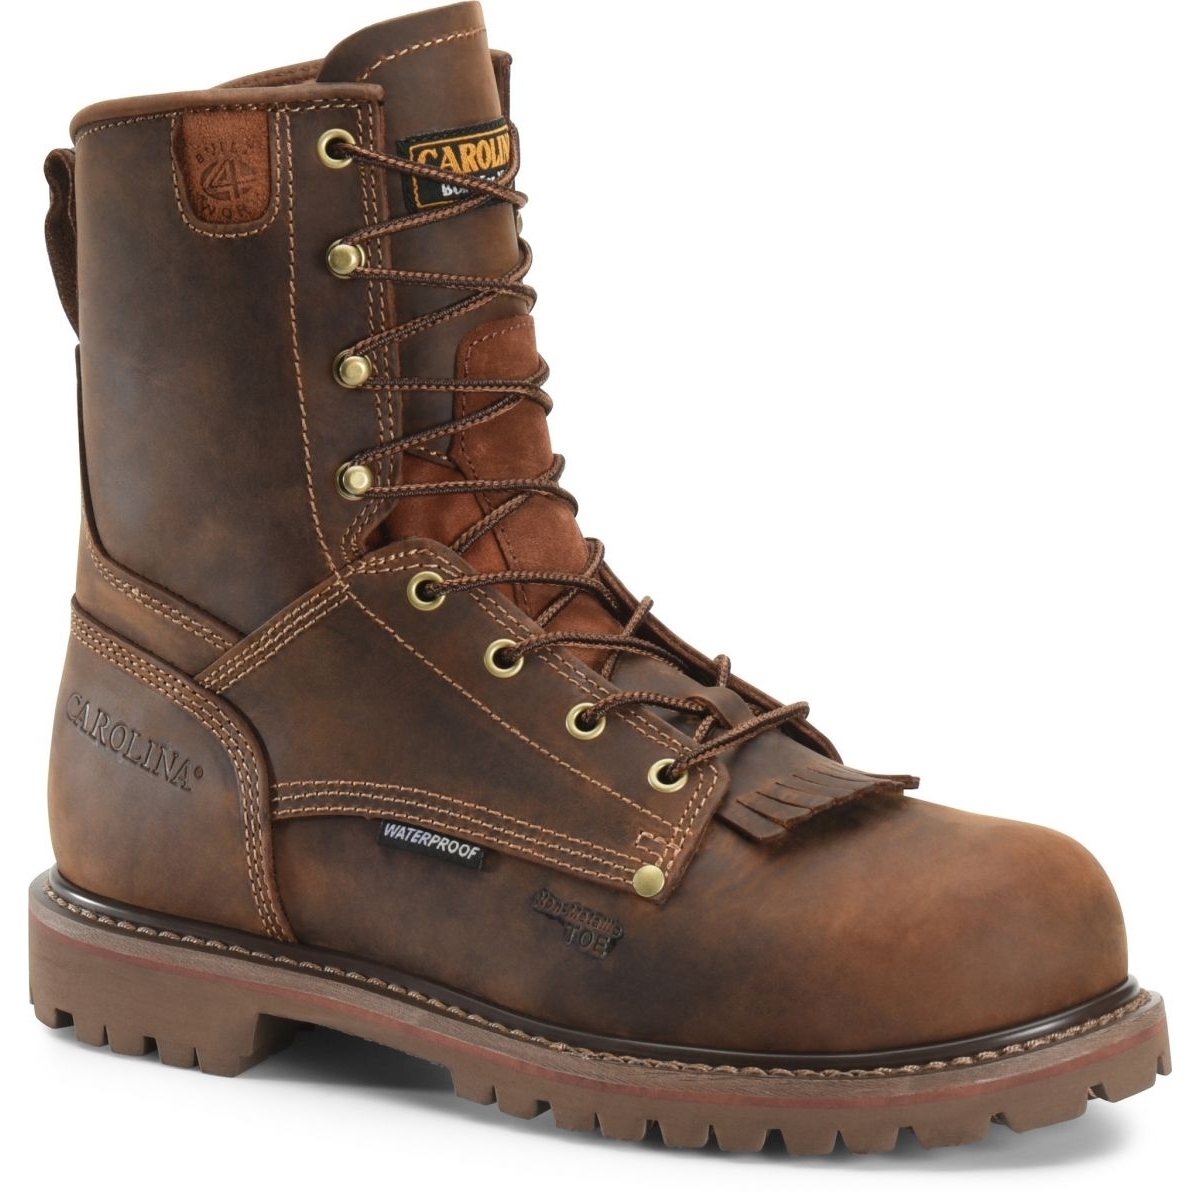 CAROLINA Men's 28 Series 8 Composite Toe Waterproof Work Boot Brown - CA8528 DARK BROWN - DARK BROWN, 10 Wide